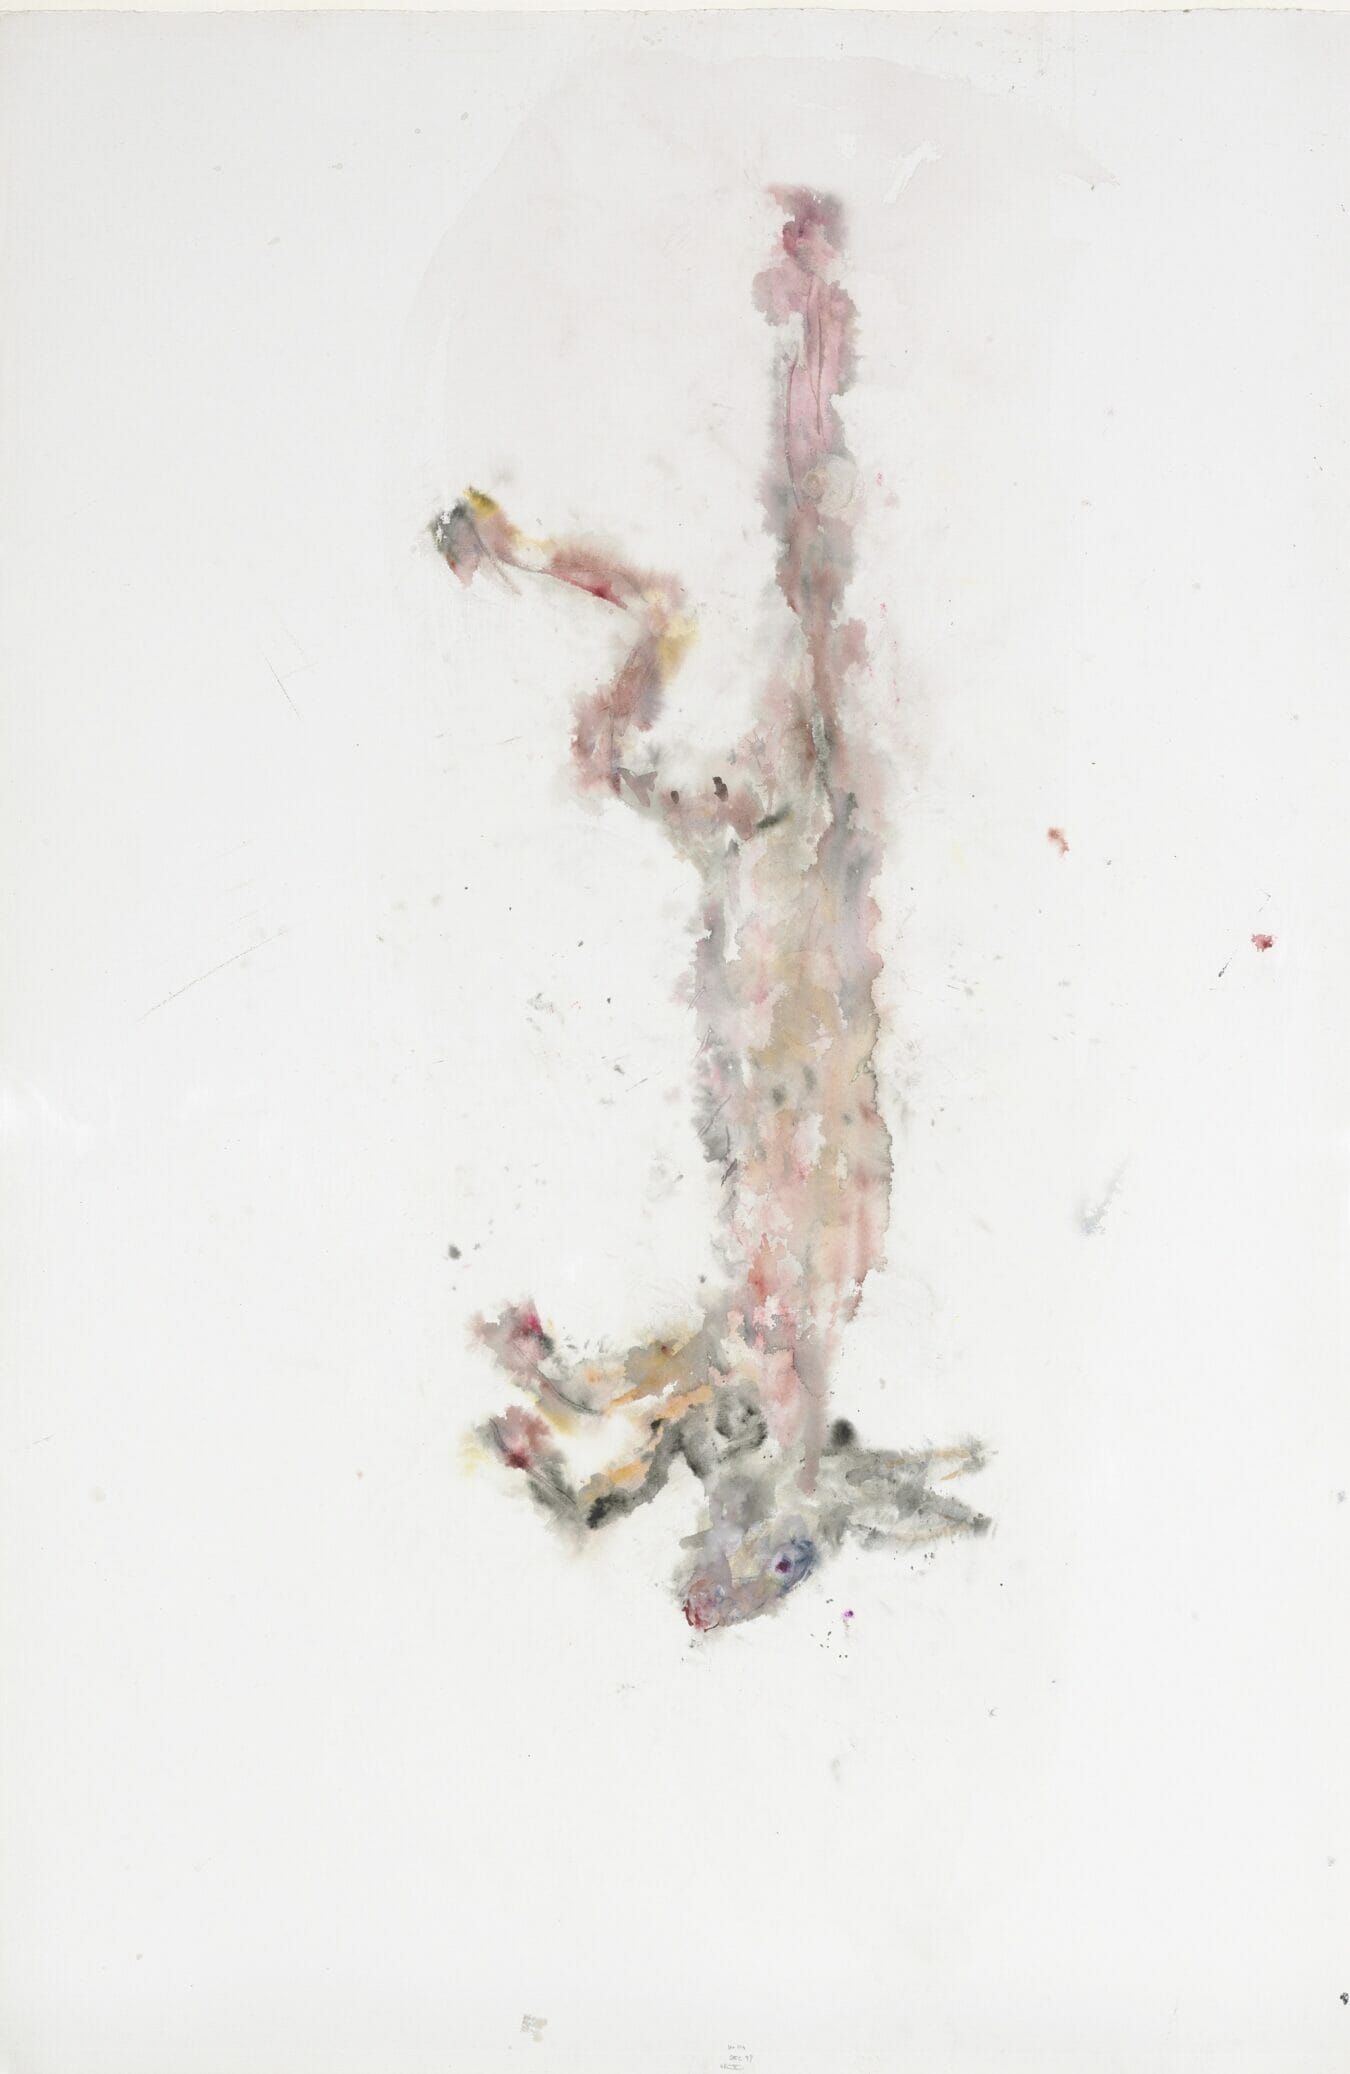 Schotse witte haas nr. X, 1997, watercolor, 152 x 102 cm, De Pont Museum